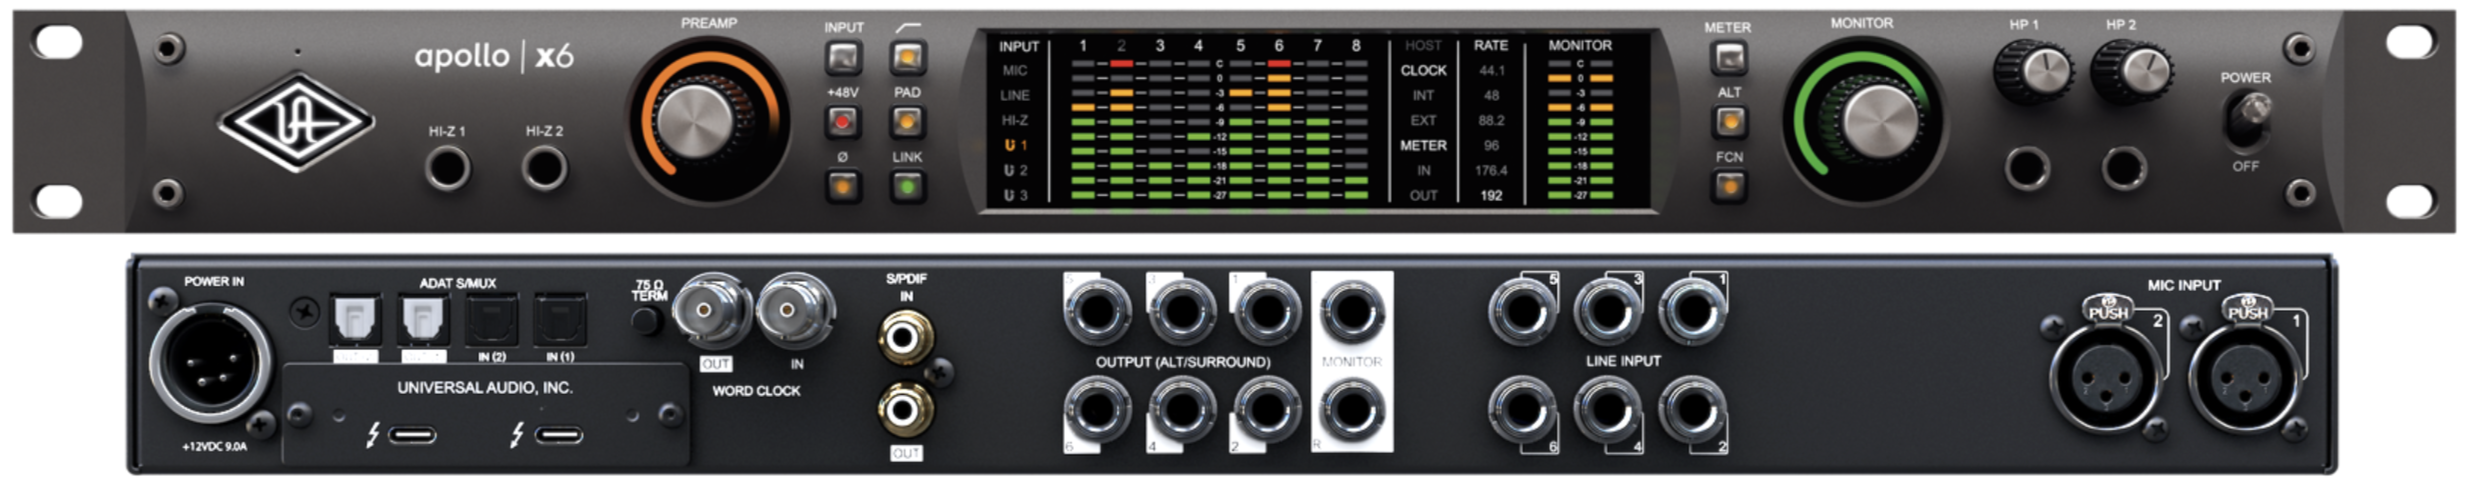 Universal Audio Apollo X6 - Thunderbolt audio interface - Variation 4